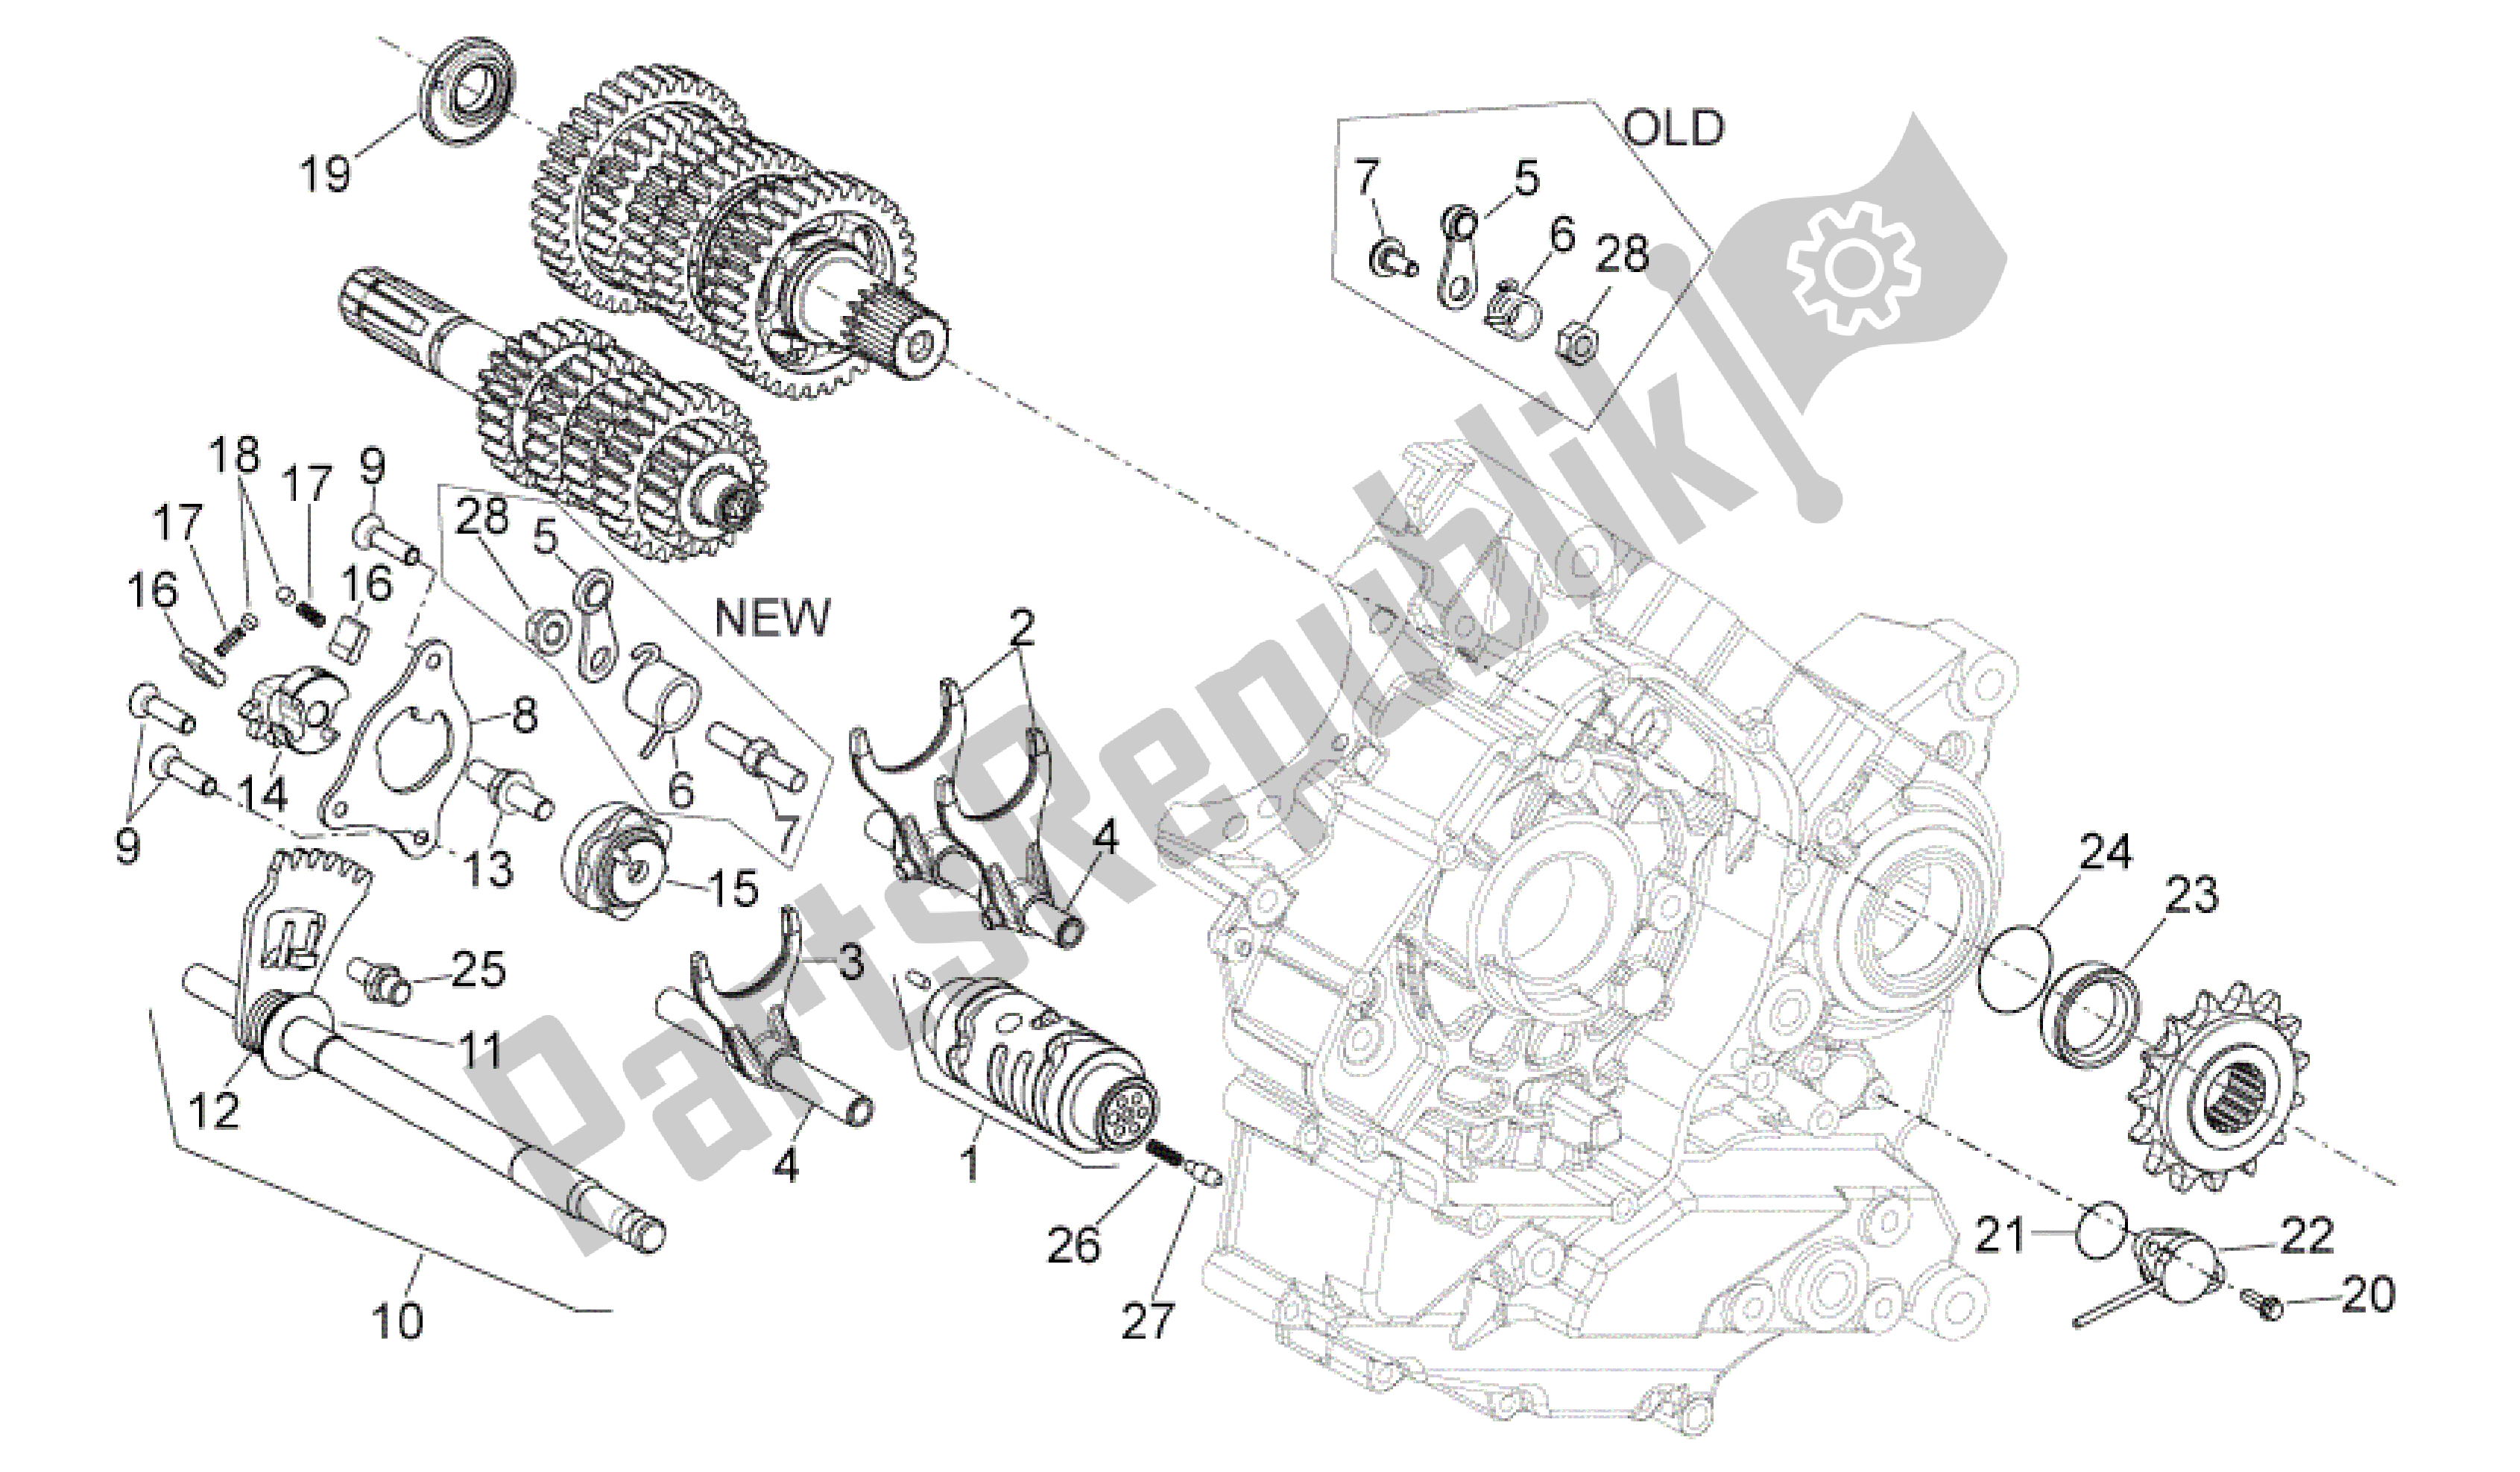 All parts for the Gear Box Selector of the Aprilia Shiver 750 2007 - 2009